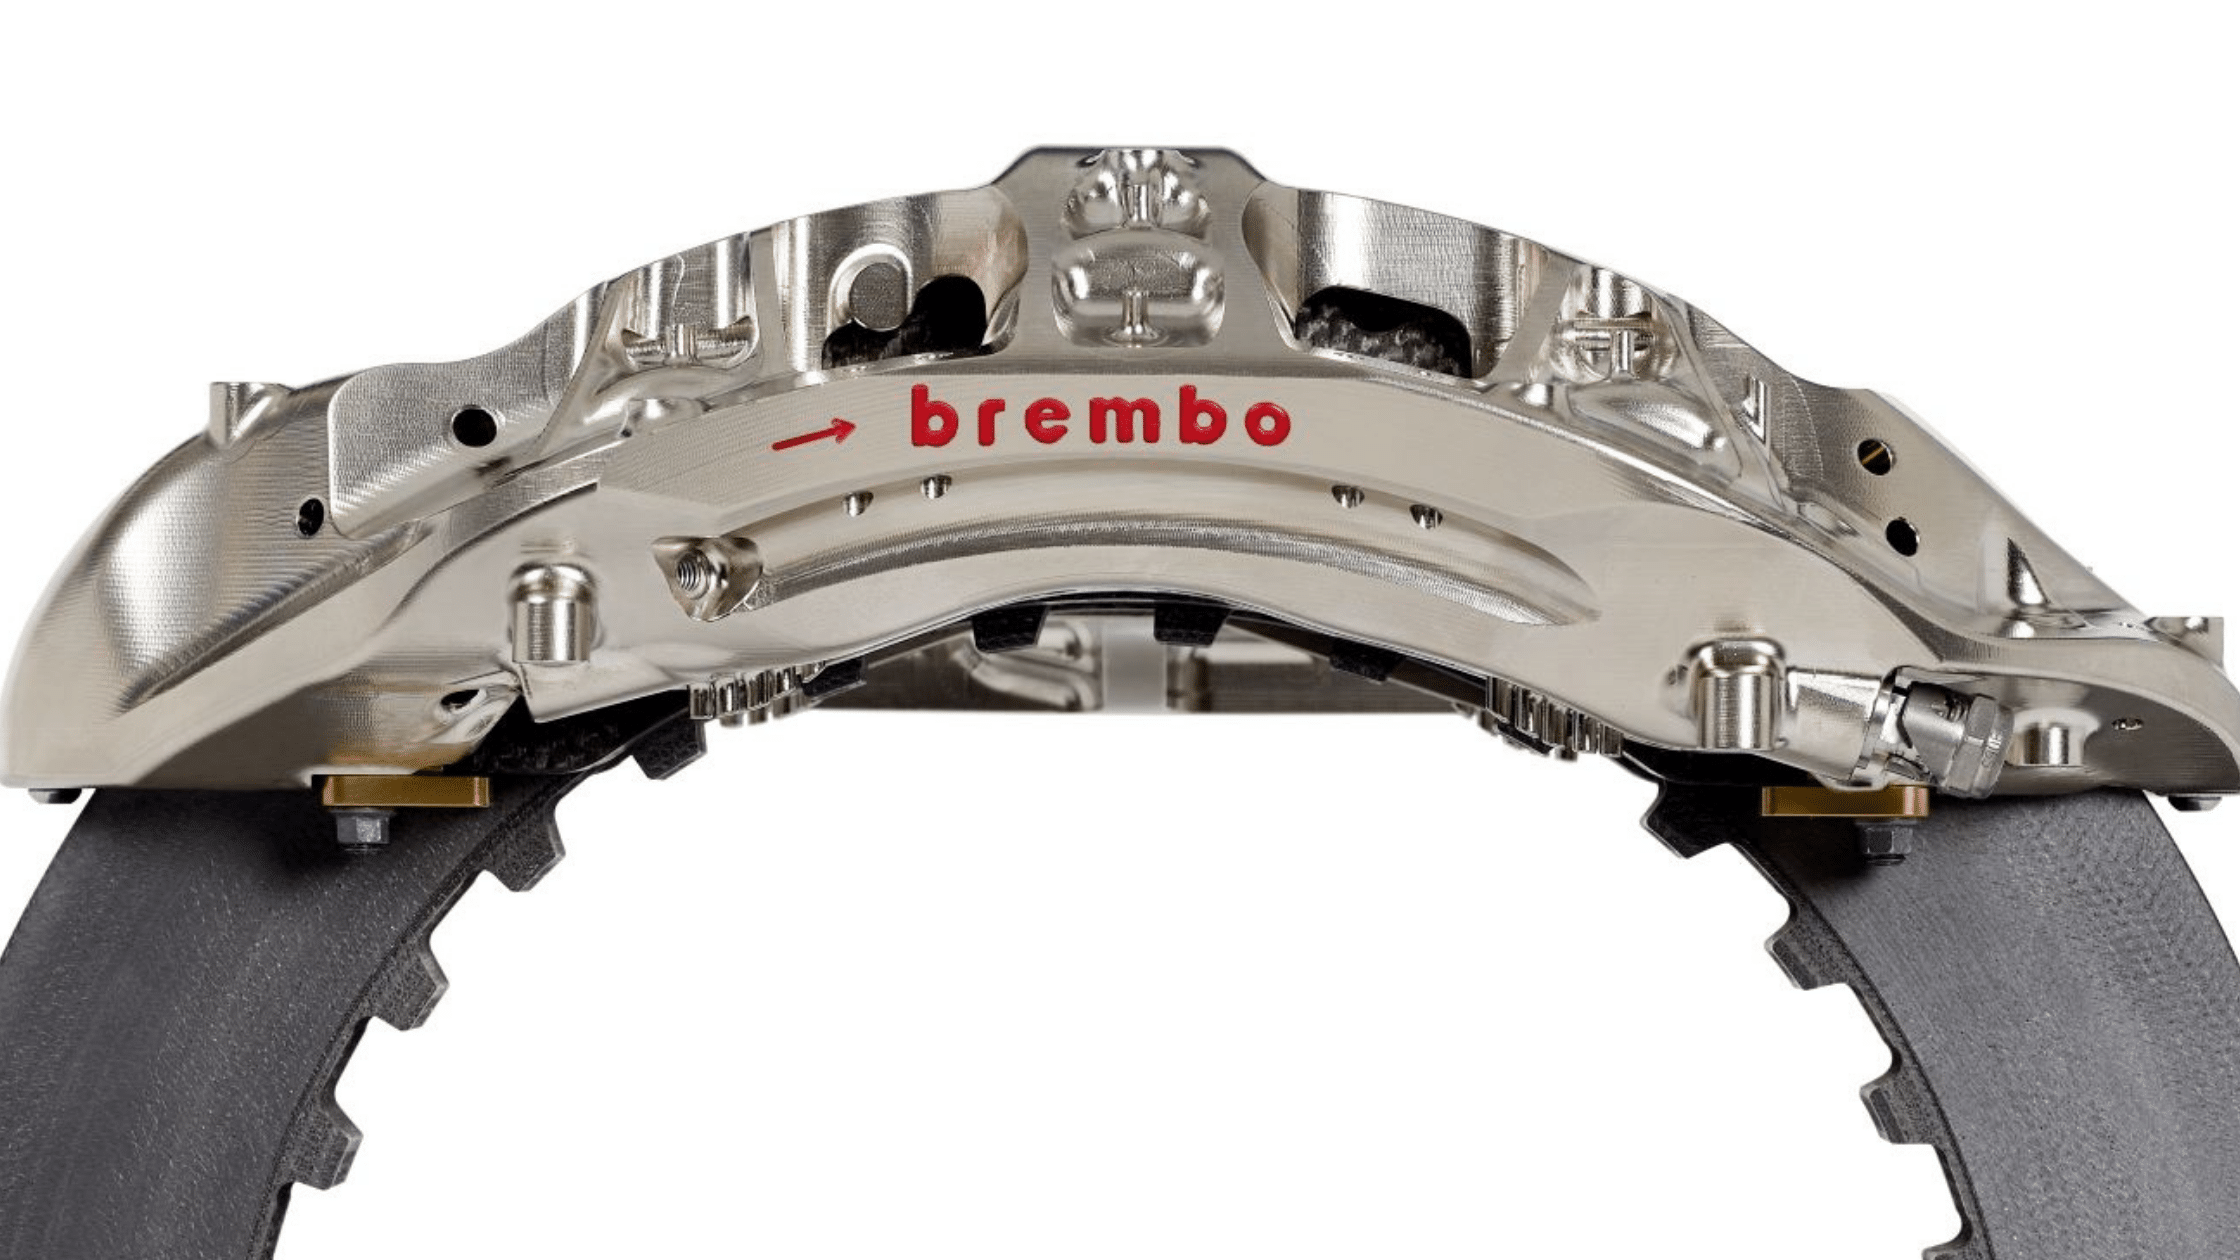 New Brembo F1 brakes debut at Bahrain